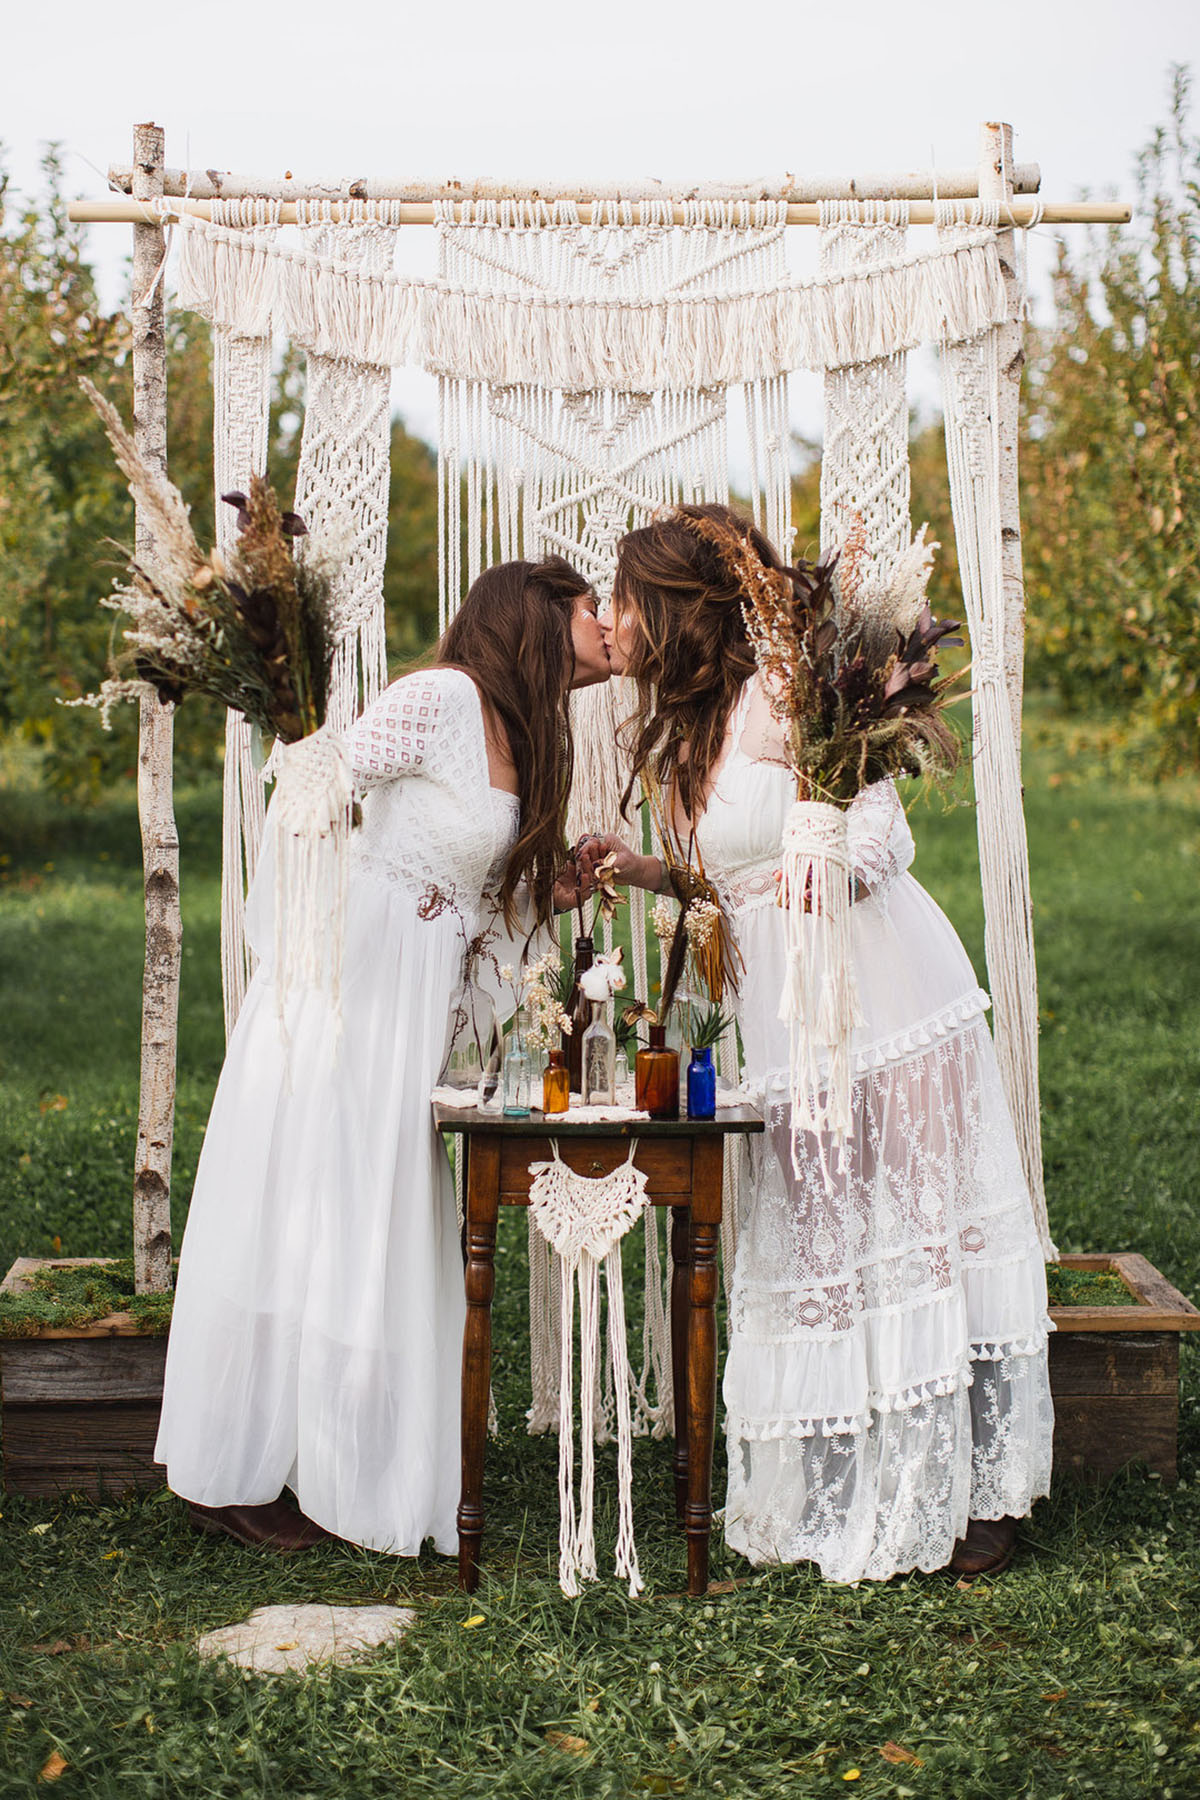 Southwestern garden wedding inspiration macrame dramatic garden of Eve creative lesbian same-sex wedding flower crown kiss